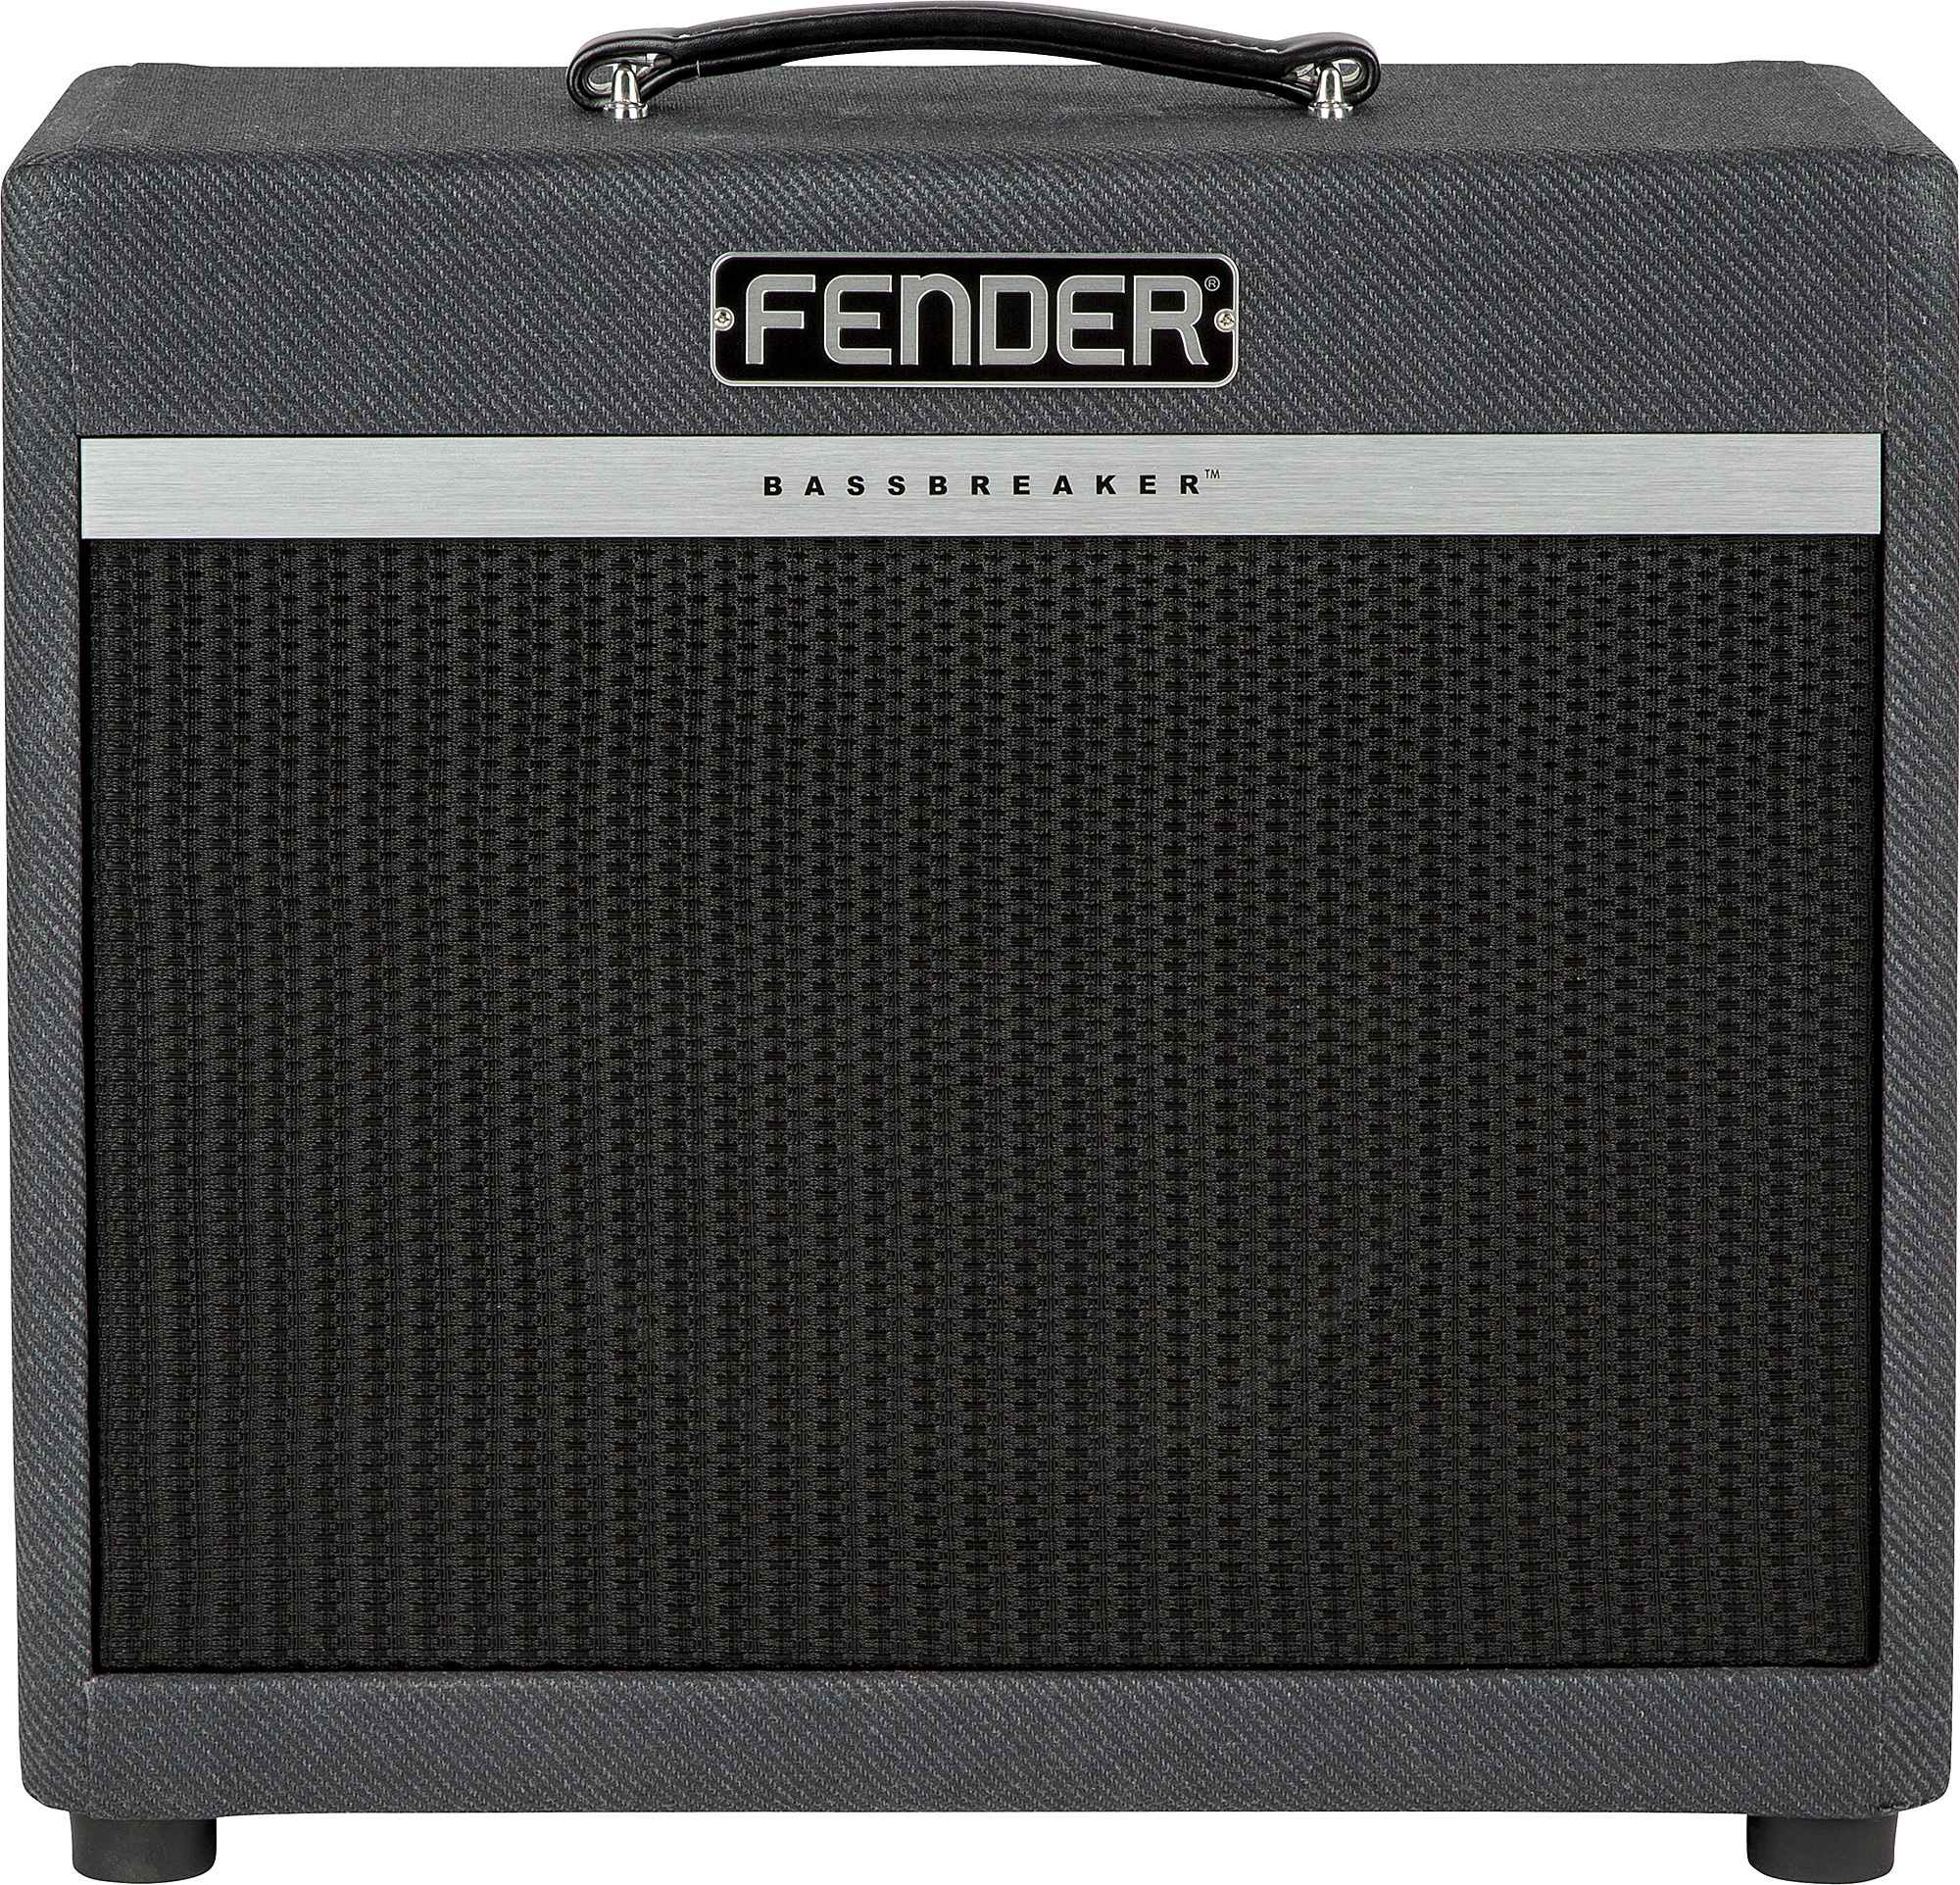 Fender Bassbreaker Bb-112 Enclosure 1x12 70w 8 Ohms Gray Tweed - Electric guitar amp cabinet - Main picture